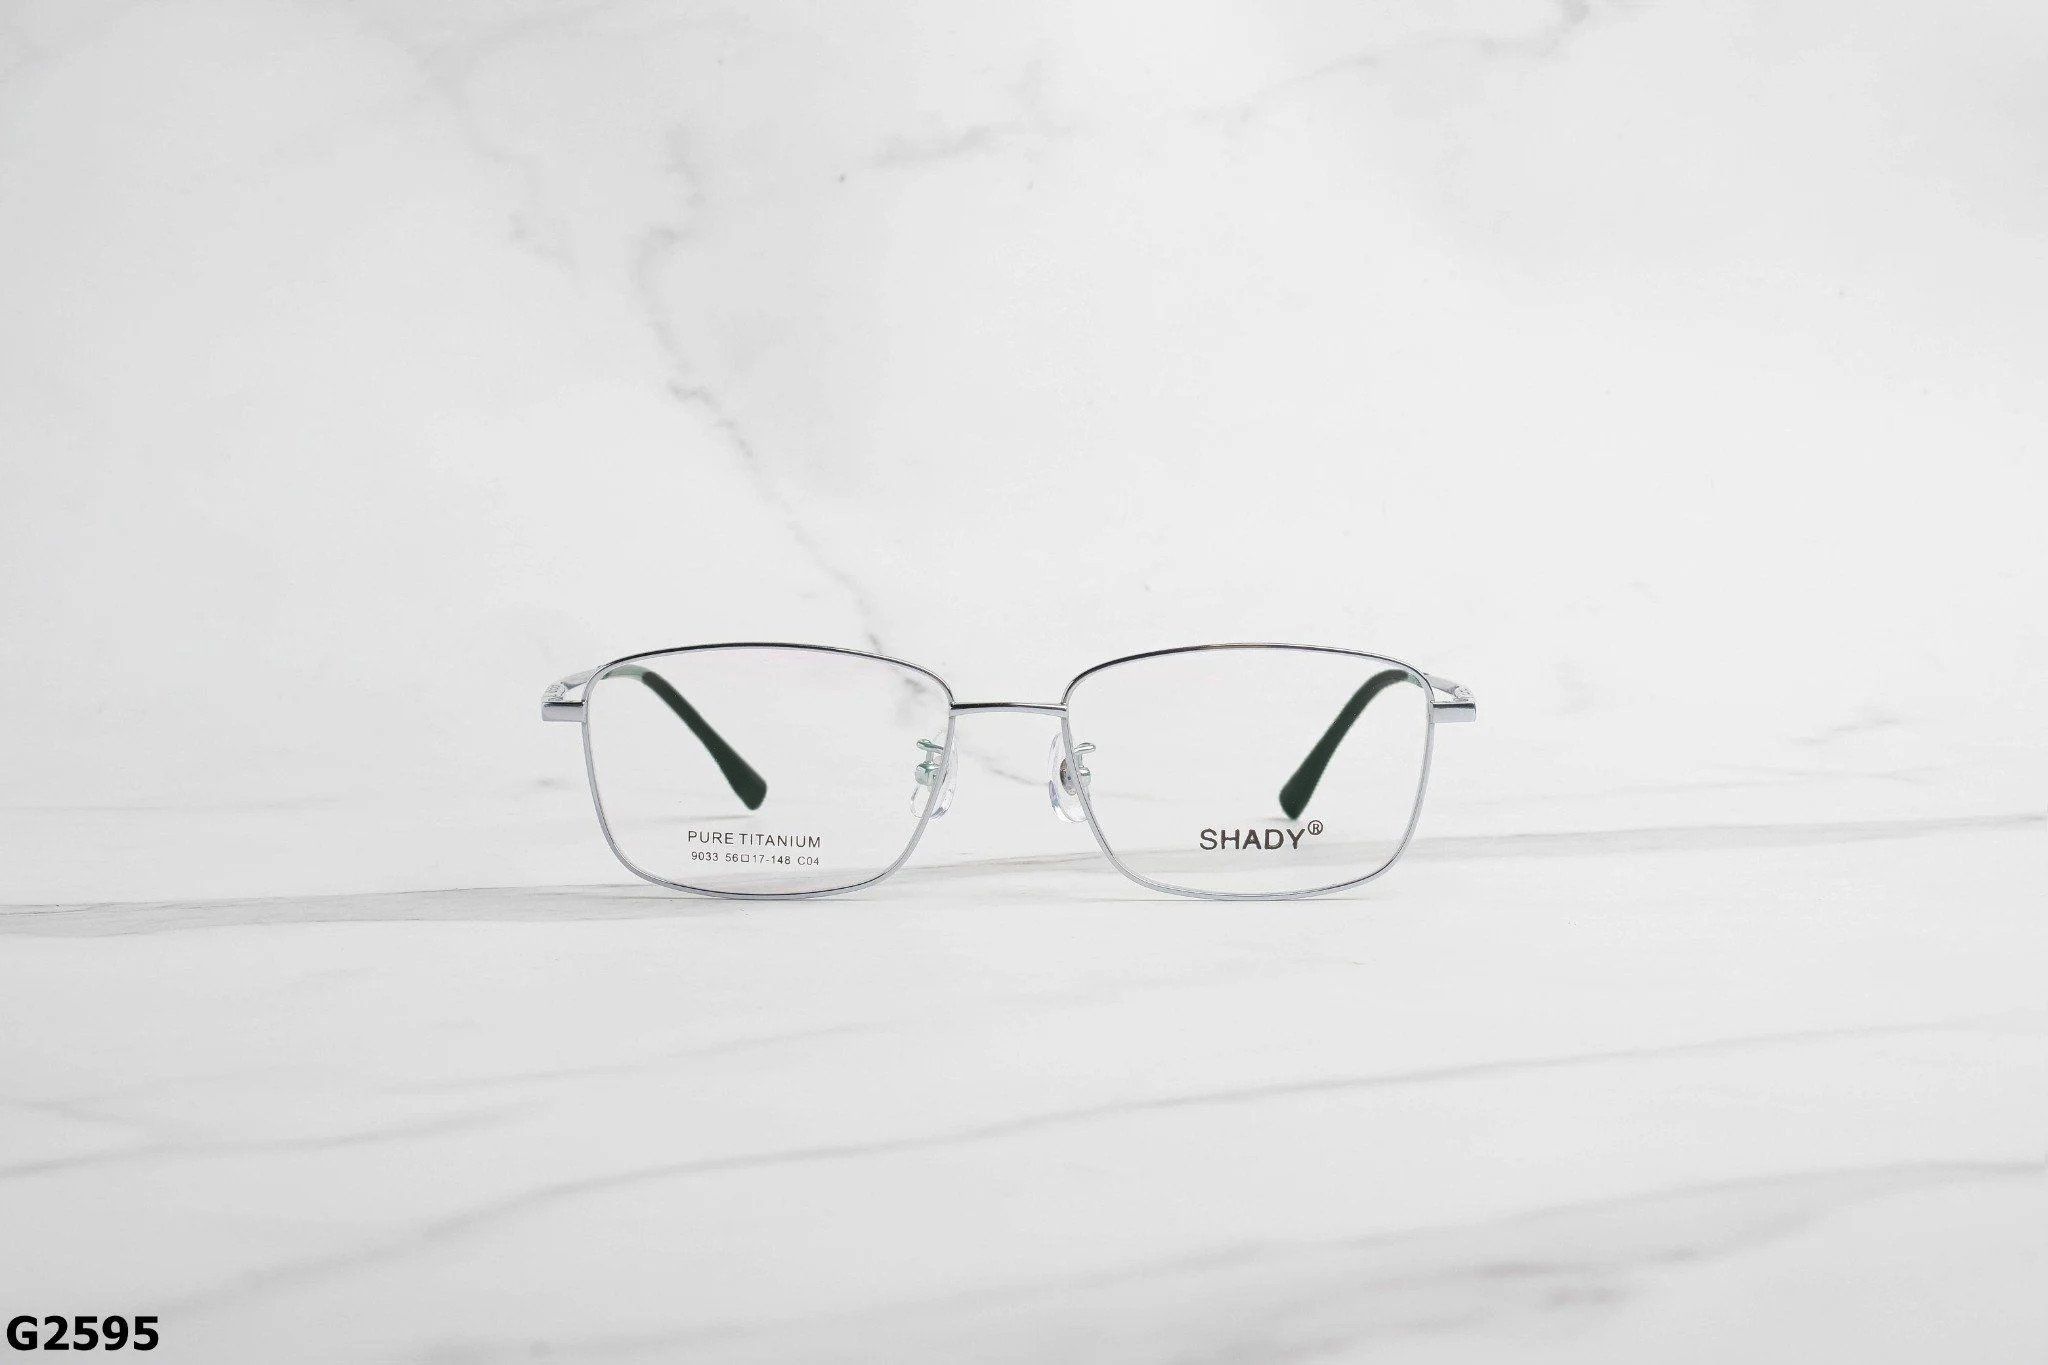  SHADY Eyewear - Glasses - G2595 